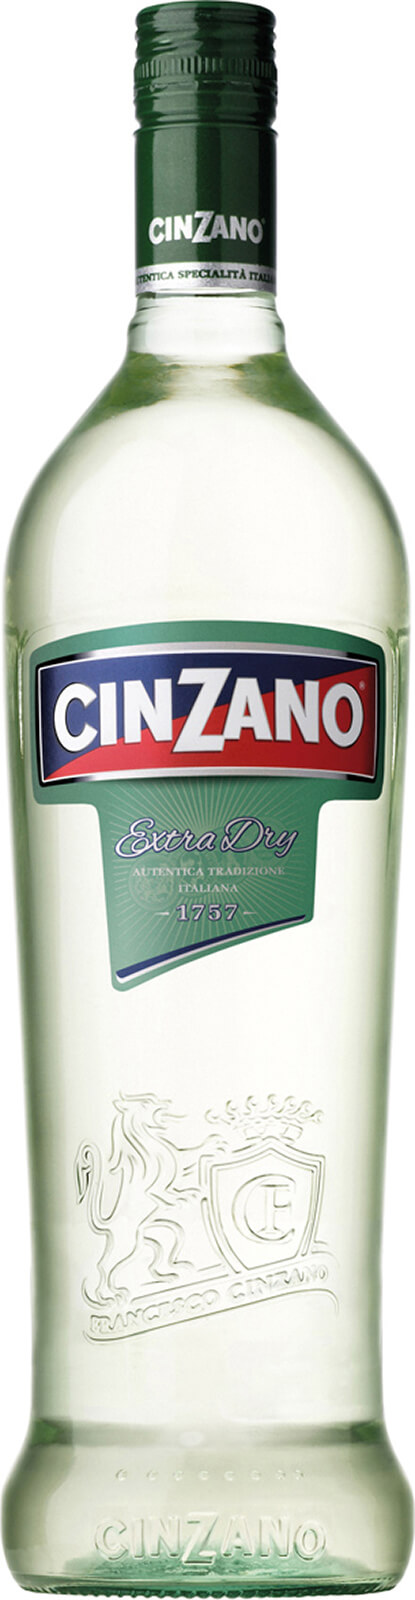 Cinzano Extra Dry Vermouth bei barfish.de kaufen